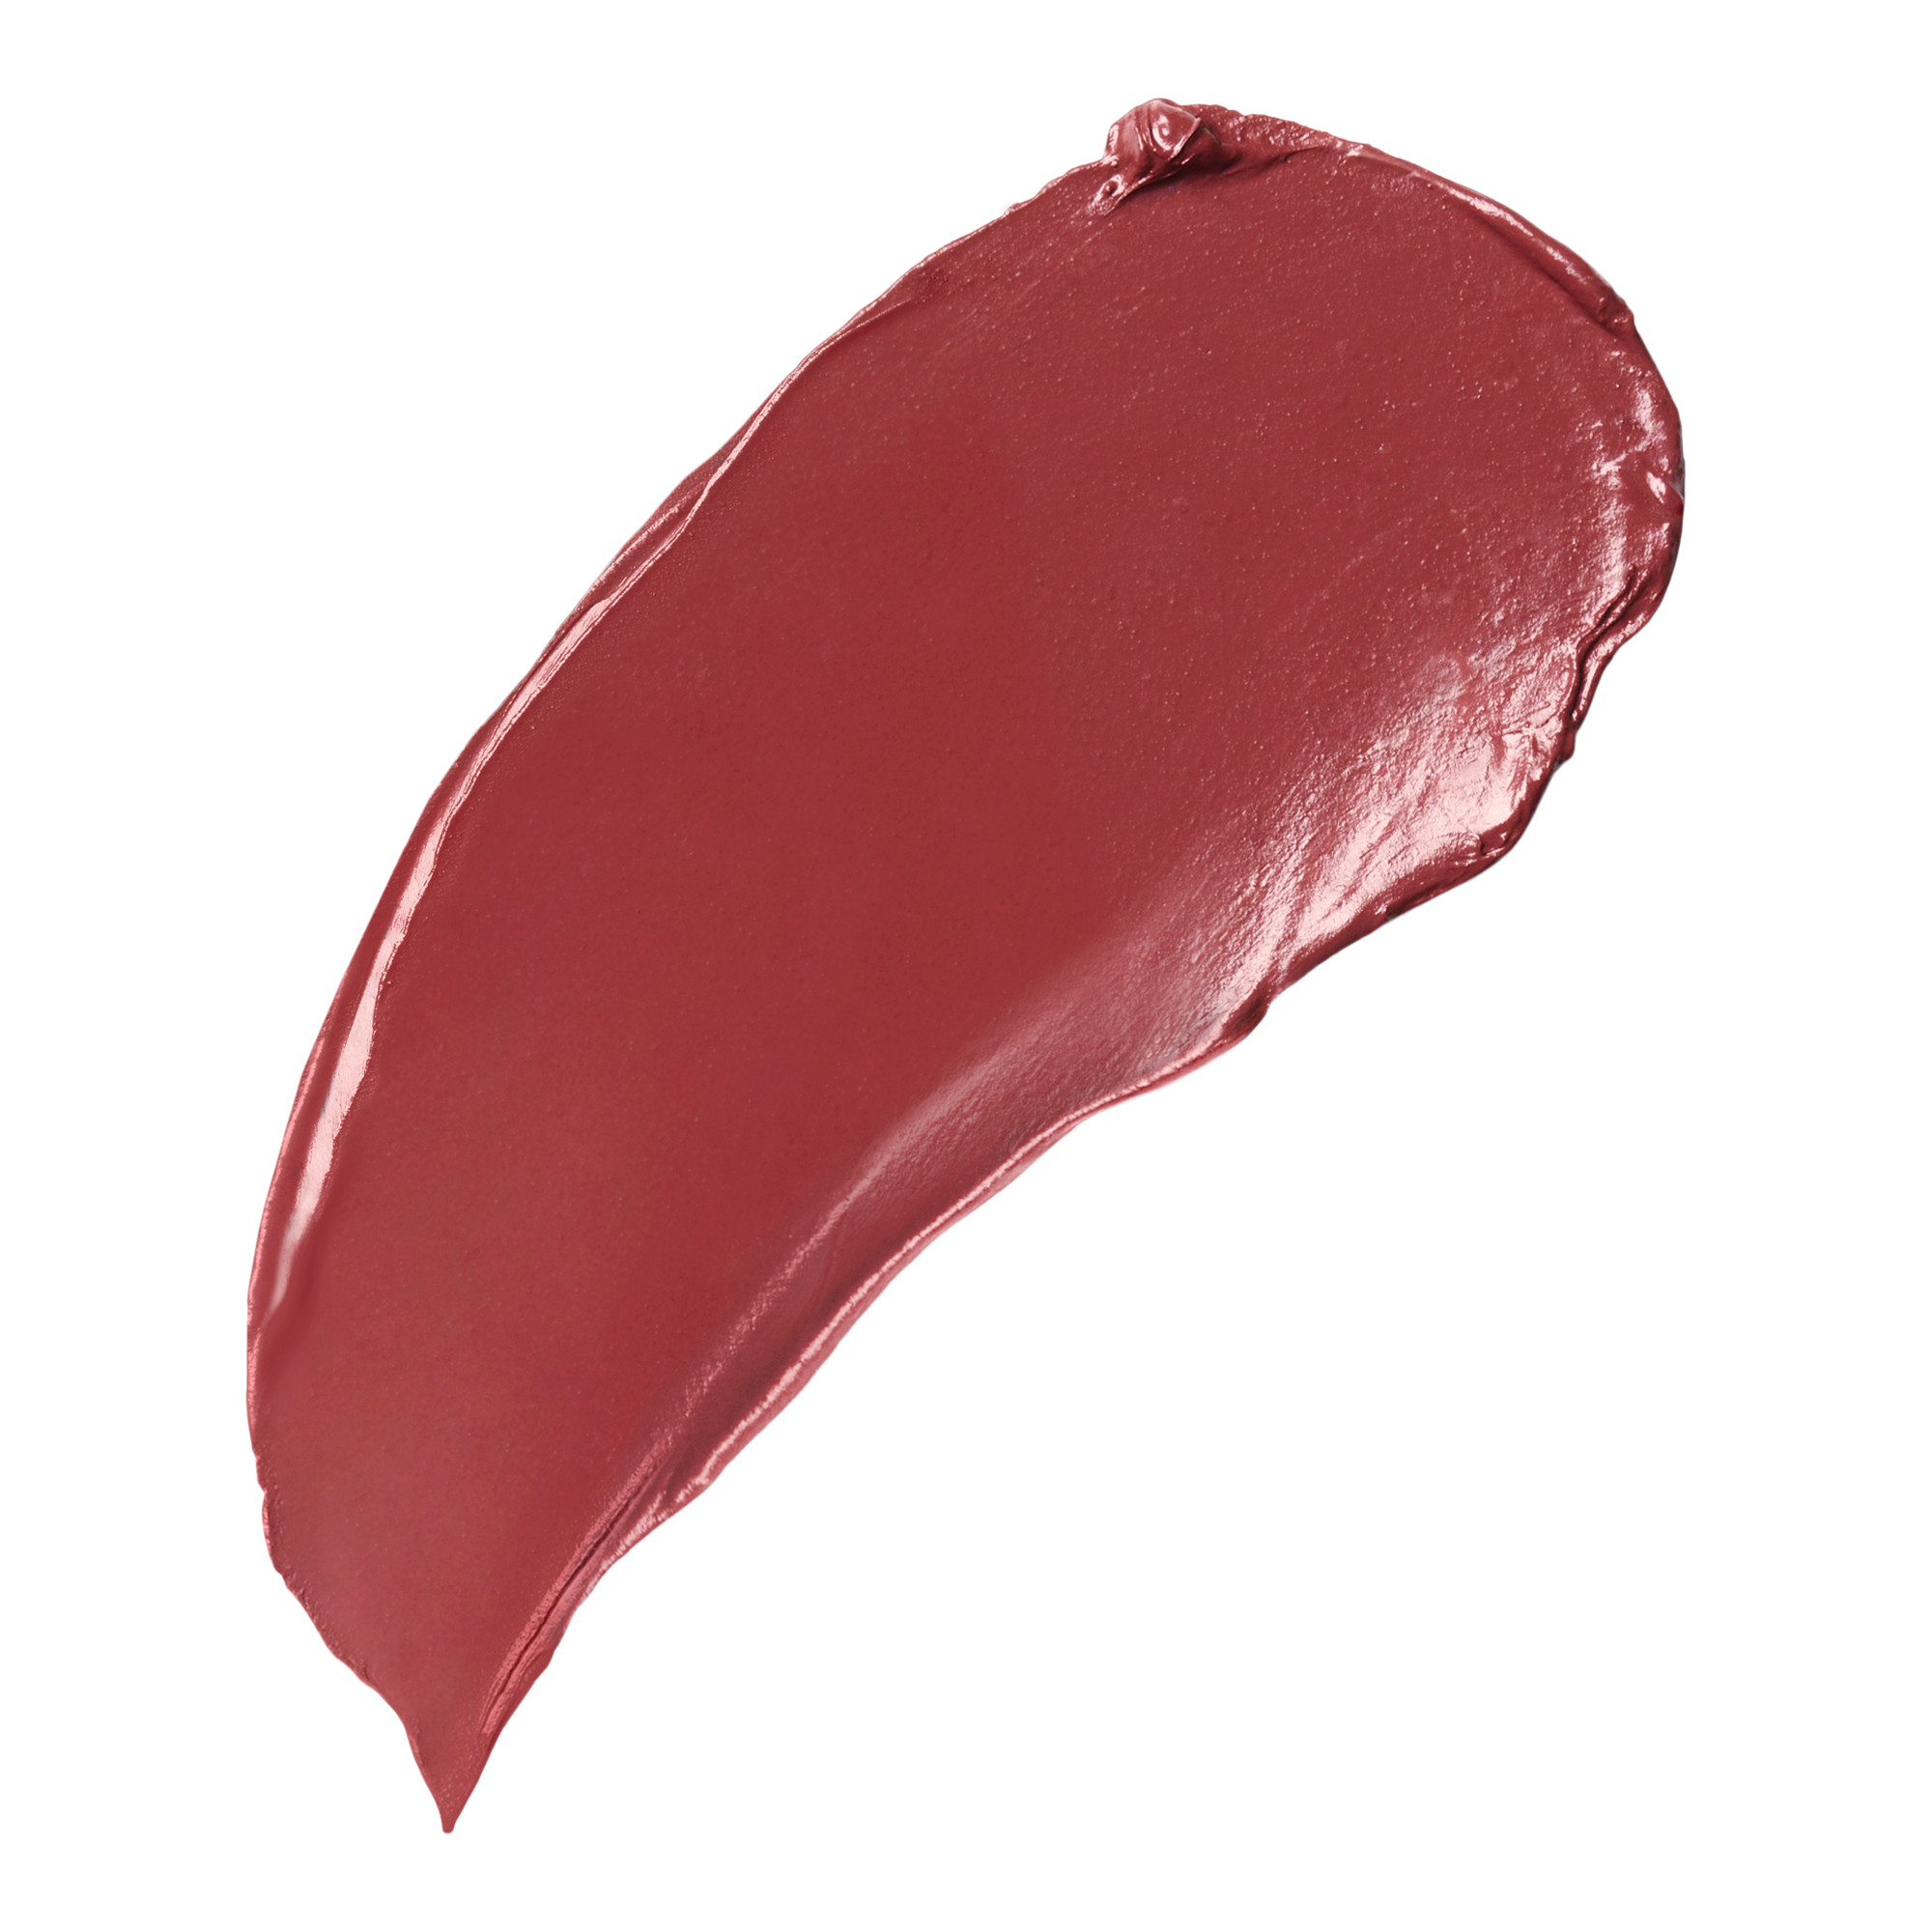 Buxom Full-On Plumping Lipstick Satin / HUSH HUSH / Swatch